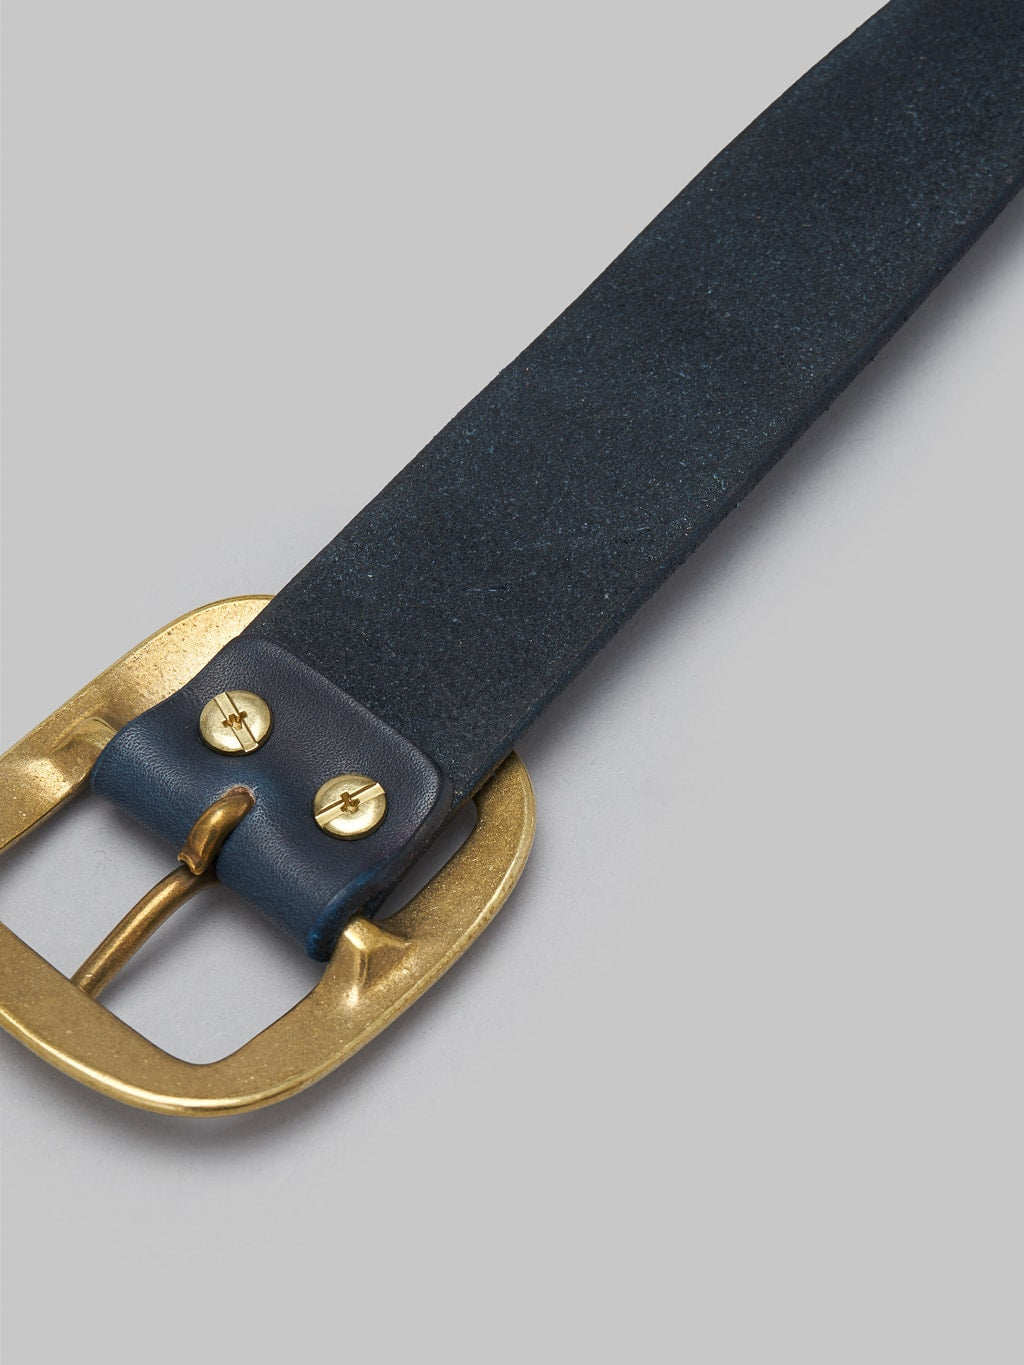 Momotaro AS 58 Natural Indigo Dye Bens Leather Belt brass buckle